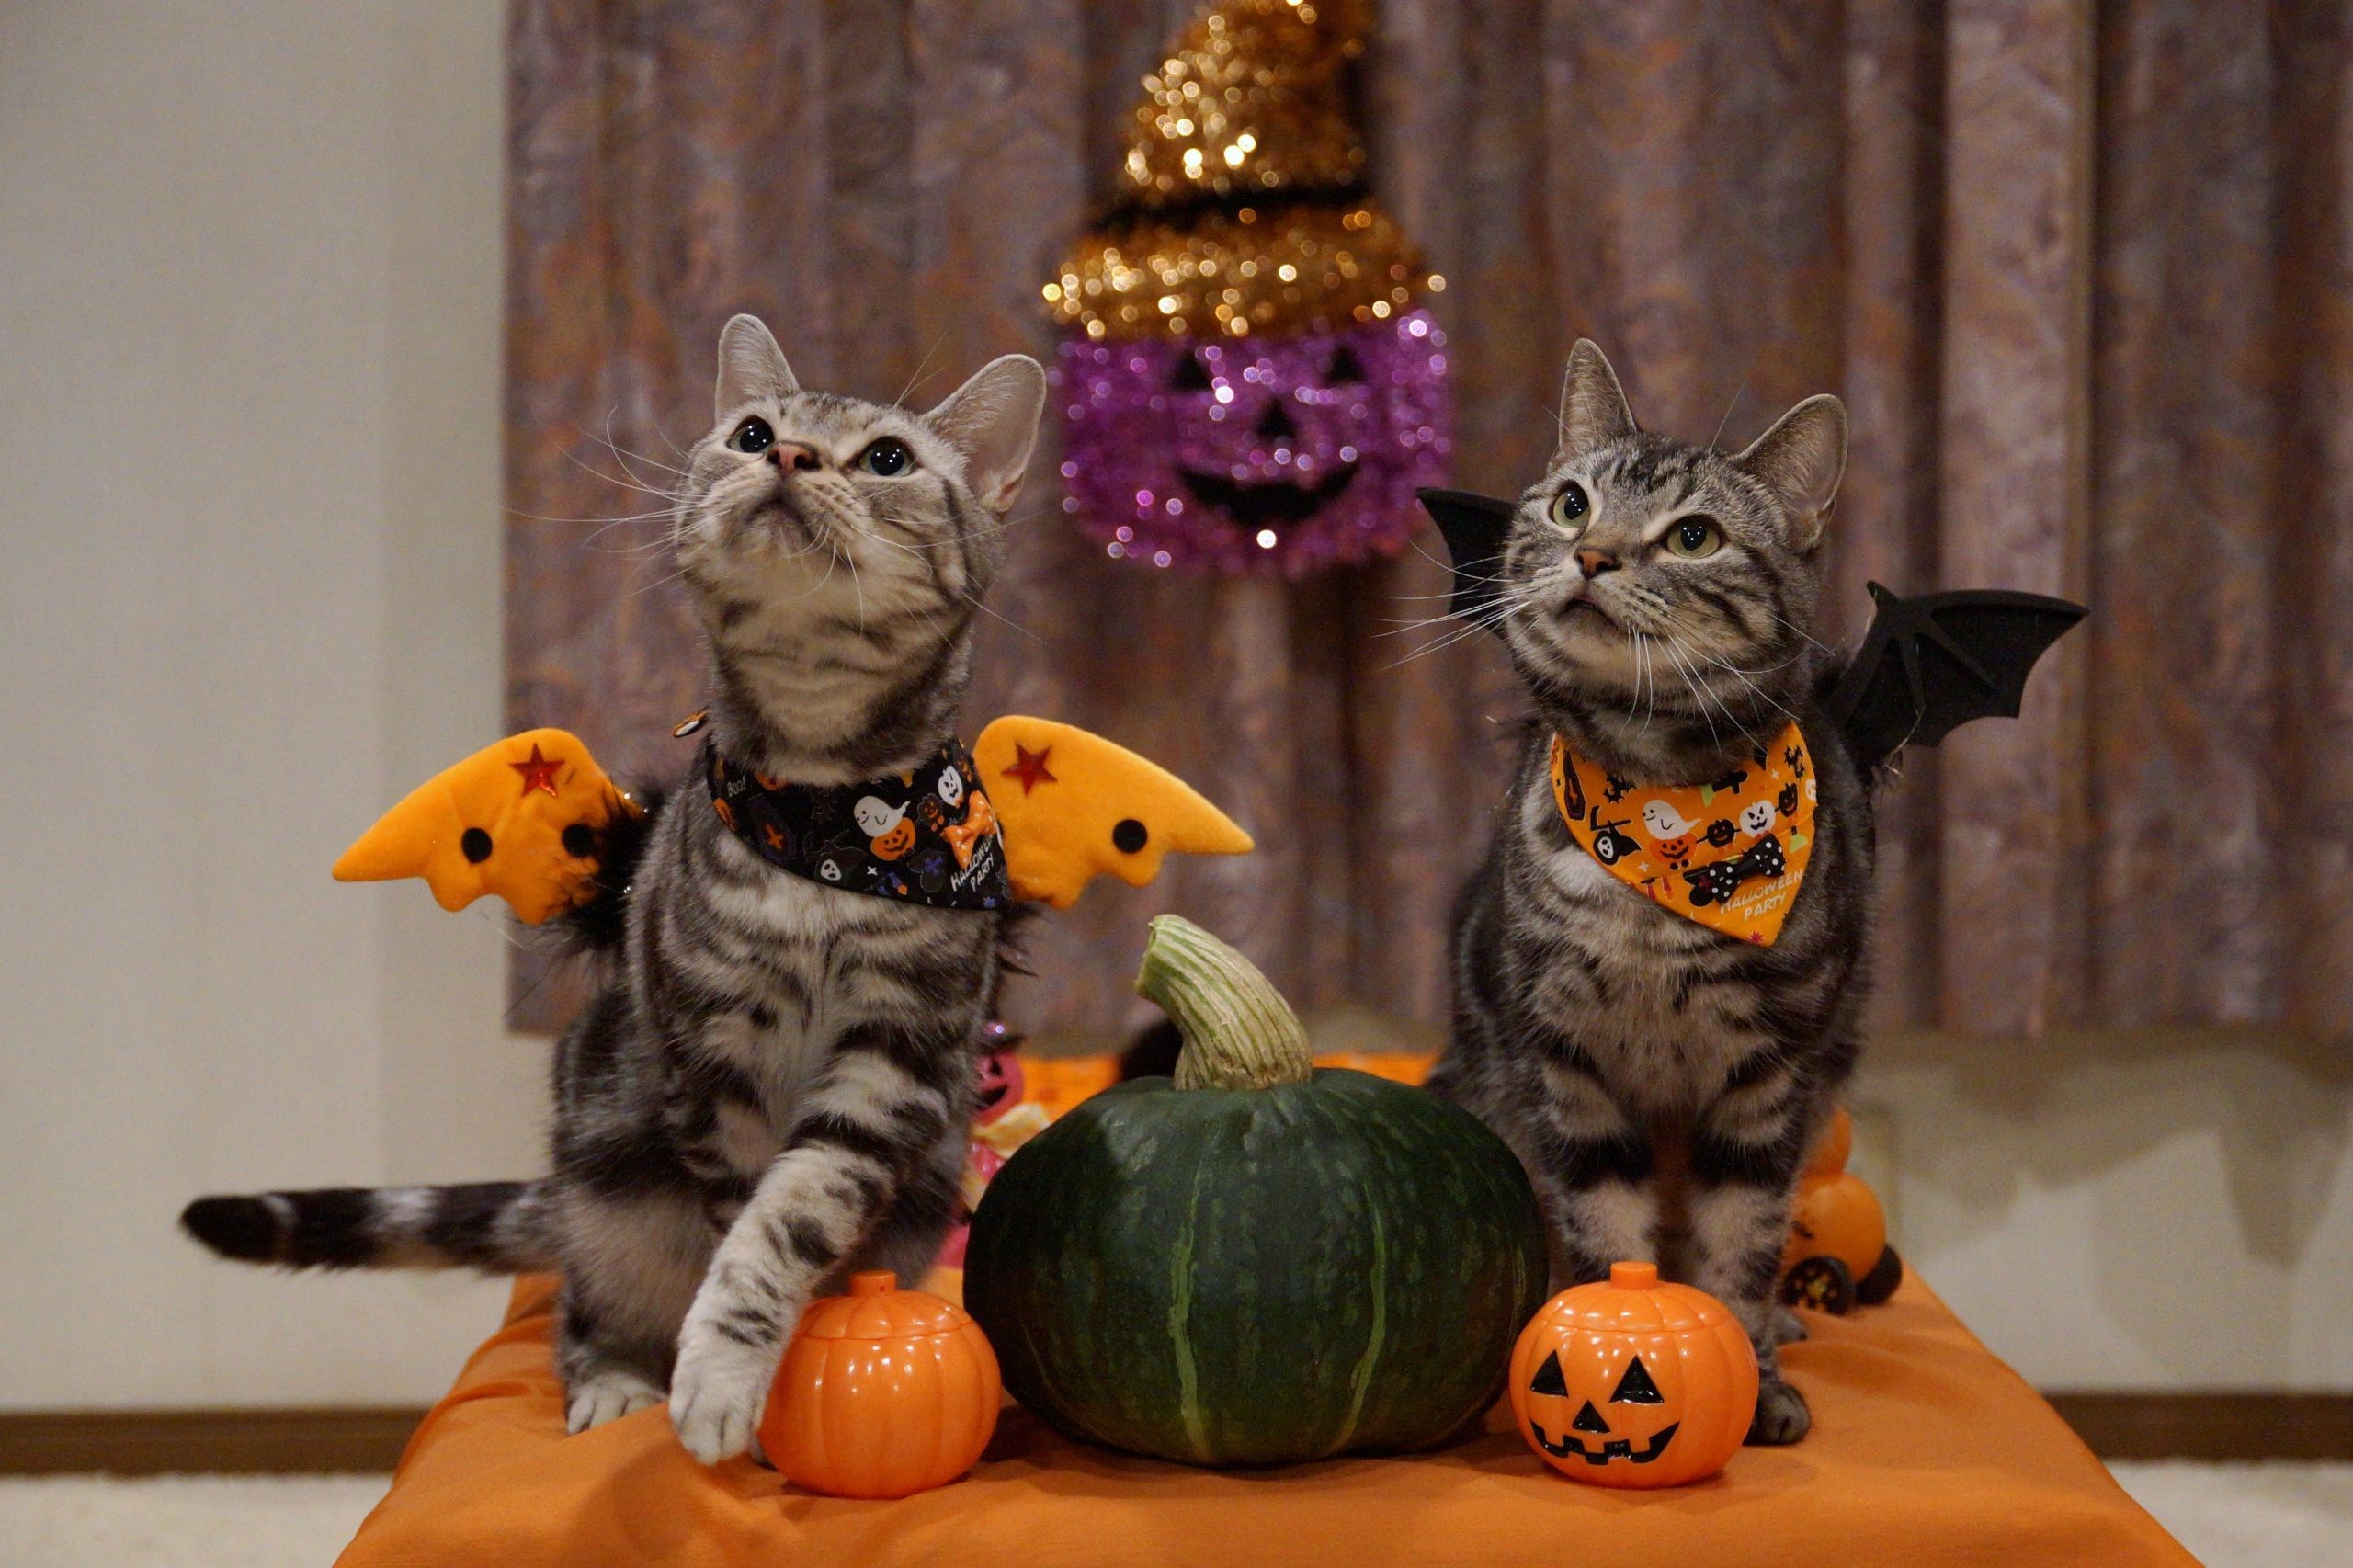 Wallpaper Cats Halloween Pumpkin Two Animals Image Download. Halloween animals, Halloween cat, Pet costumes